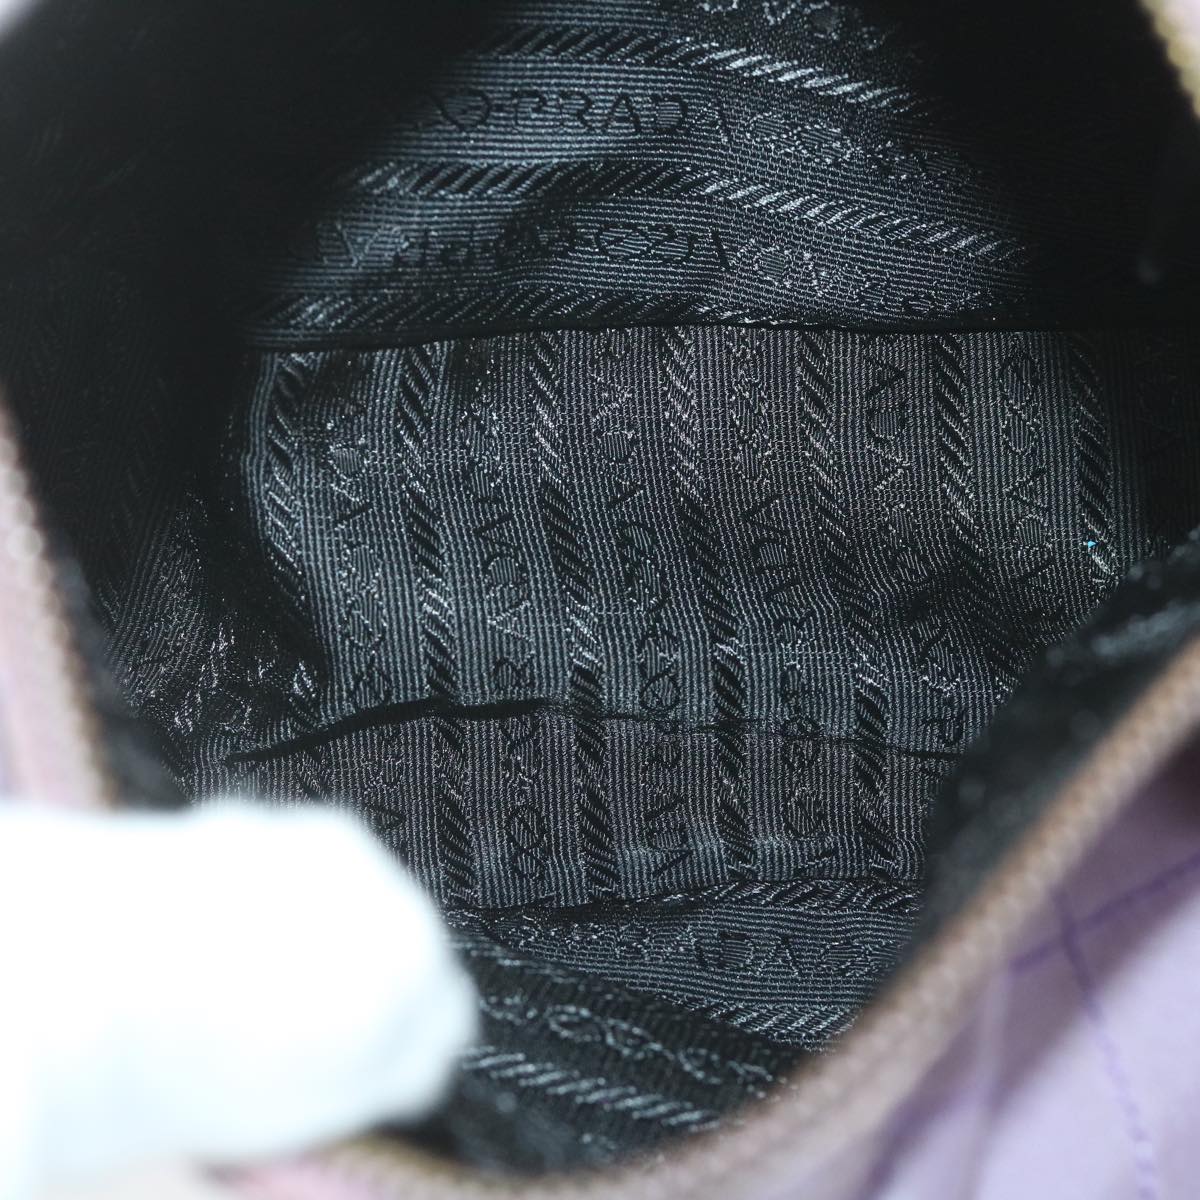 PRADA Chain Shoulder Bag Nylon Purple Auth bs9970